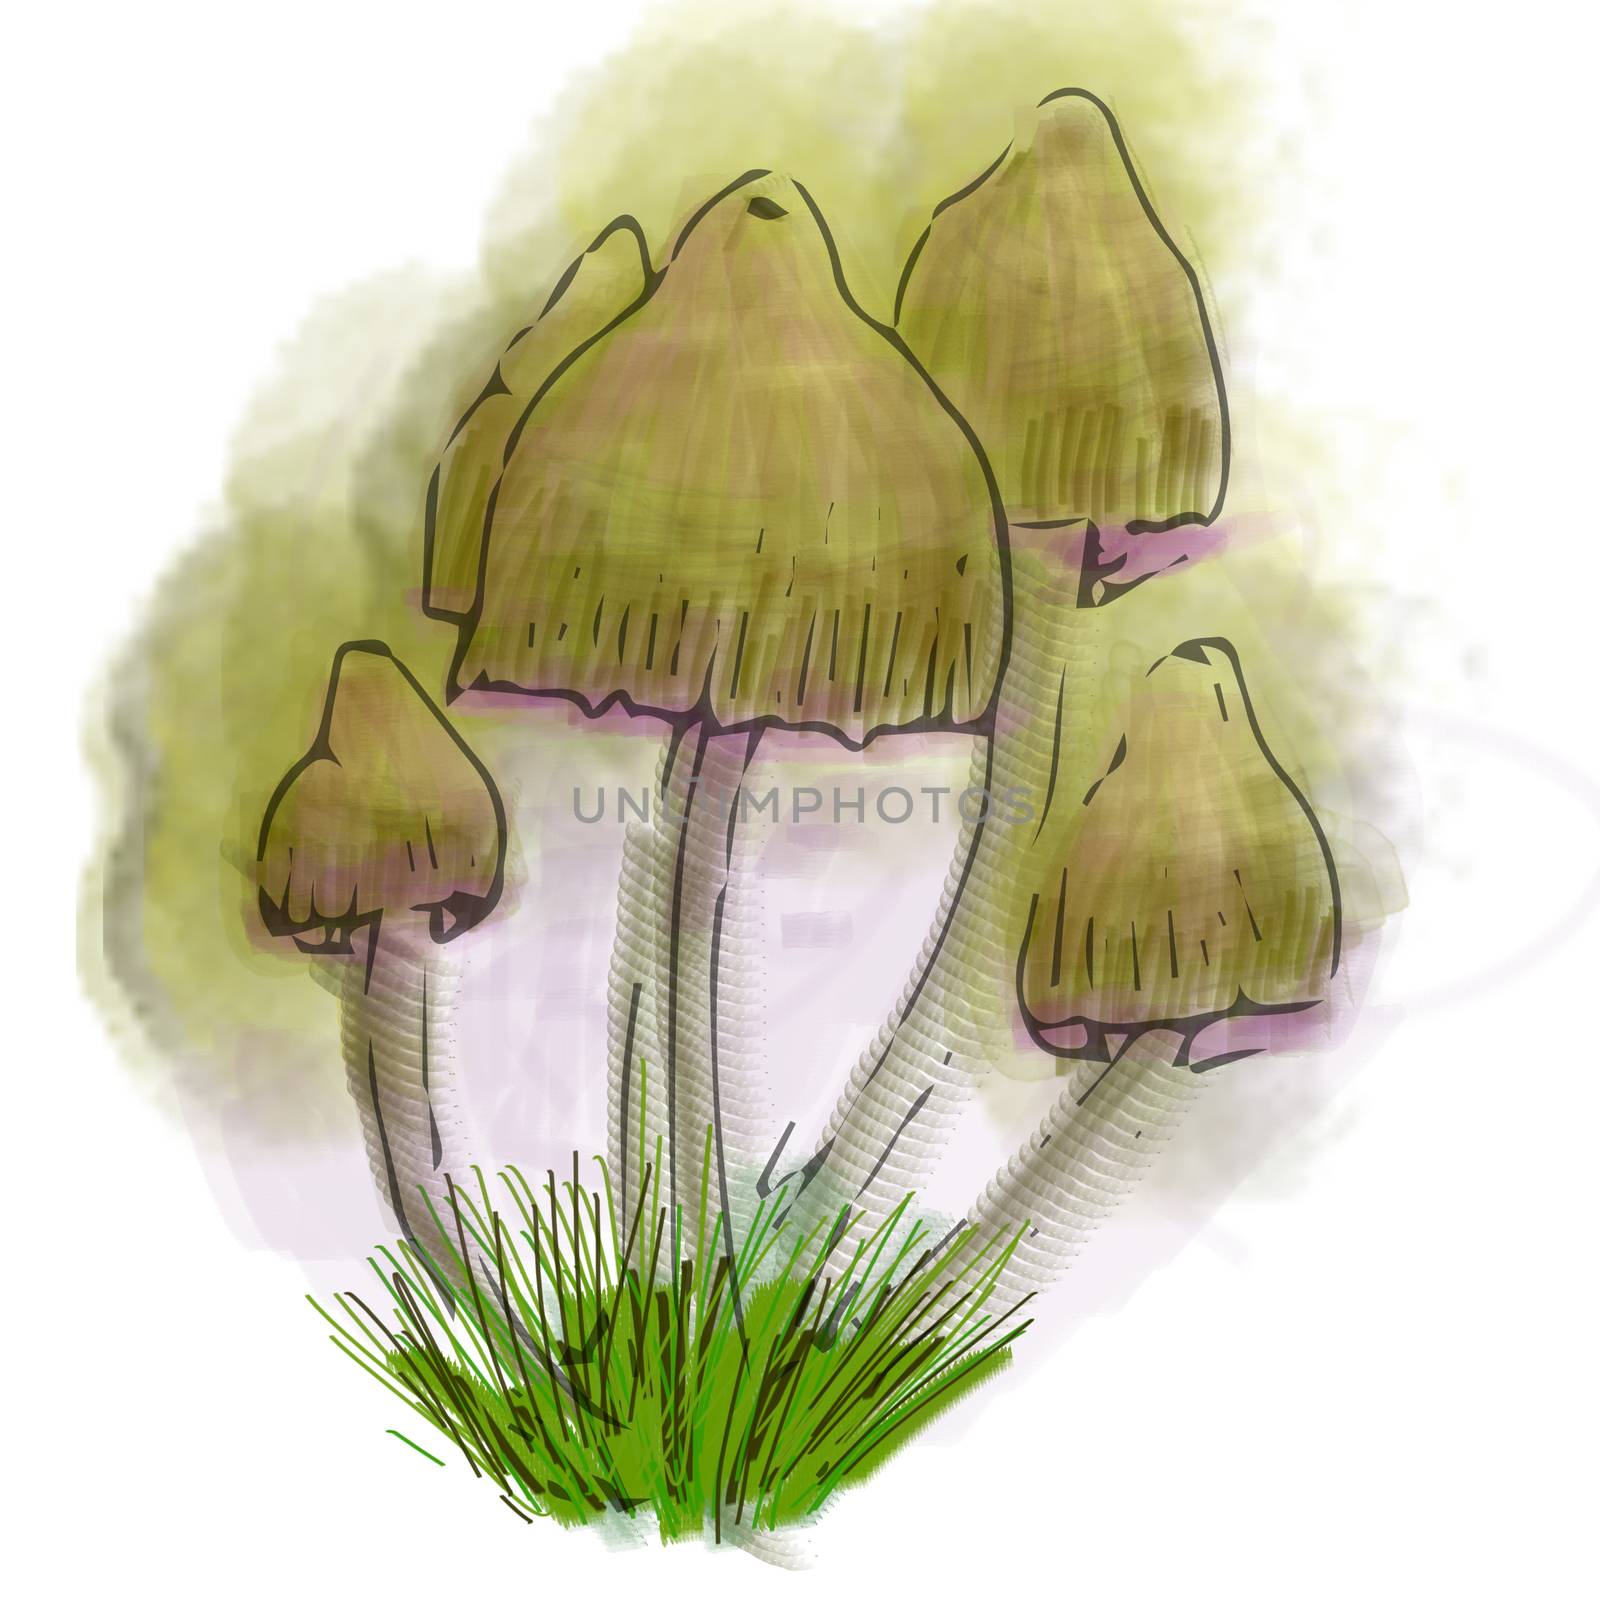 Conditionally edible mushrooms Illustration made in photoshop. by natalia_voroshilova